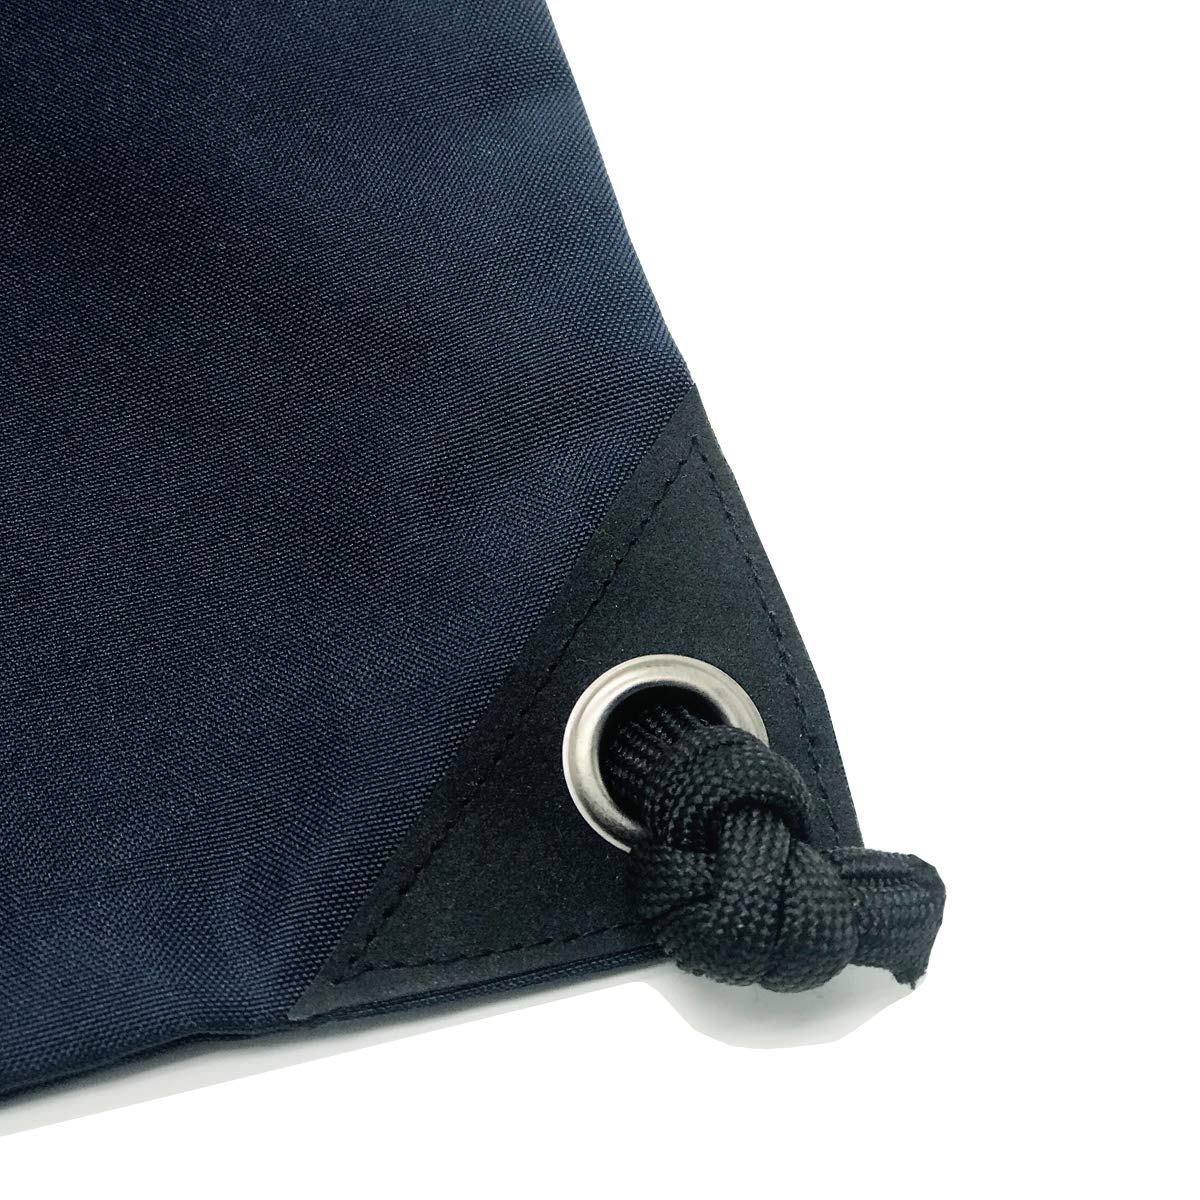 Outdoor Sport Gym Sack Waterproof Drawstring Backpack Bag Navy Blue HLC001